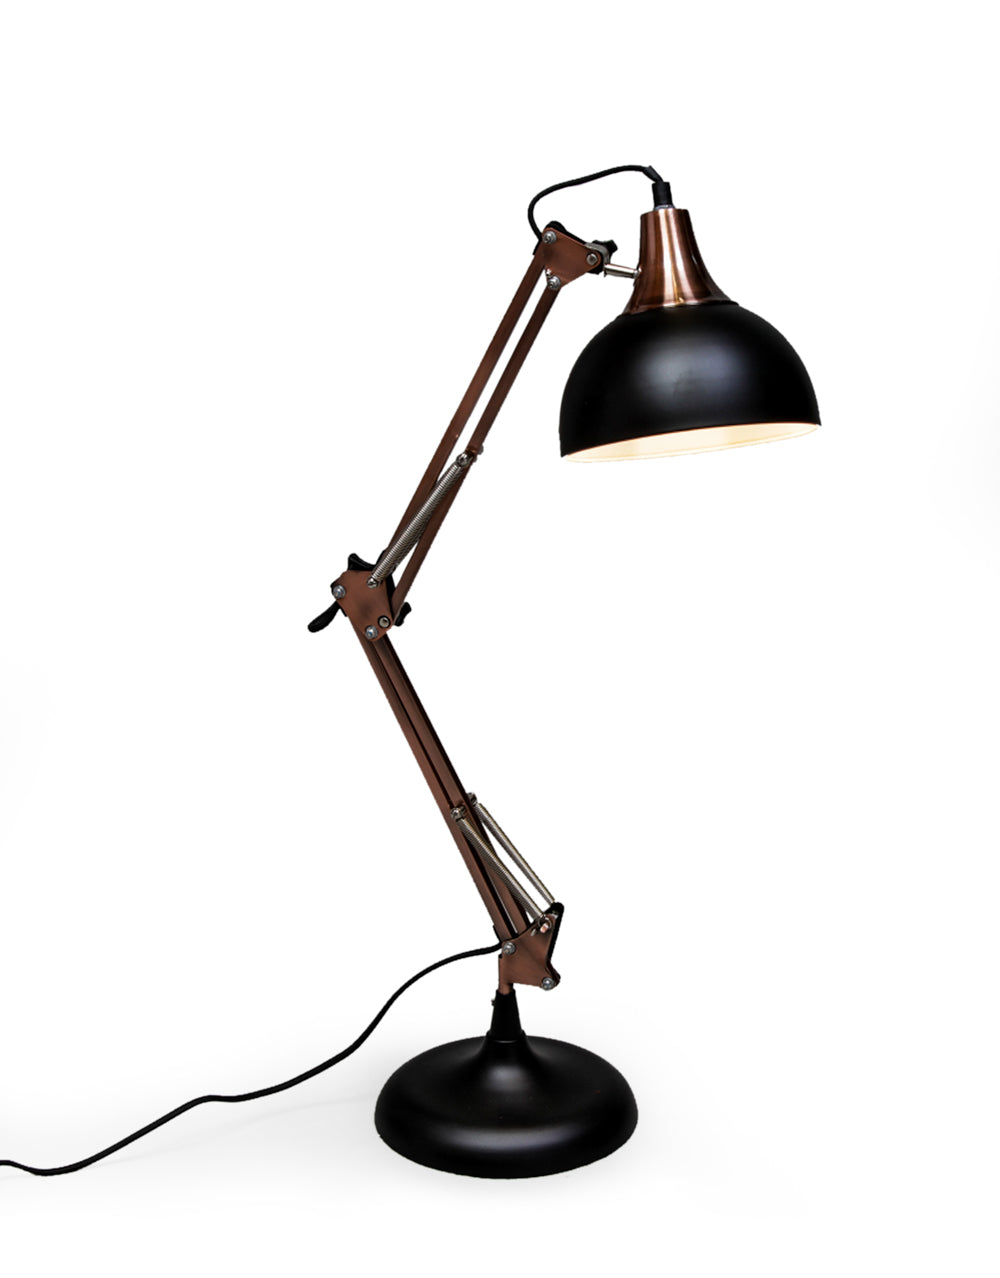 Matt Black and Vintage Copper Traditional Desk Lamp